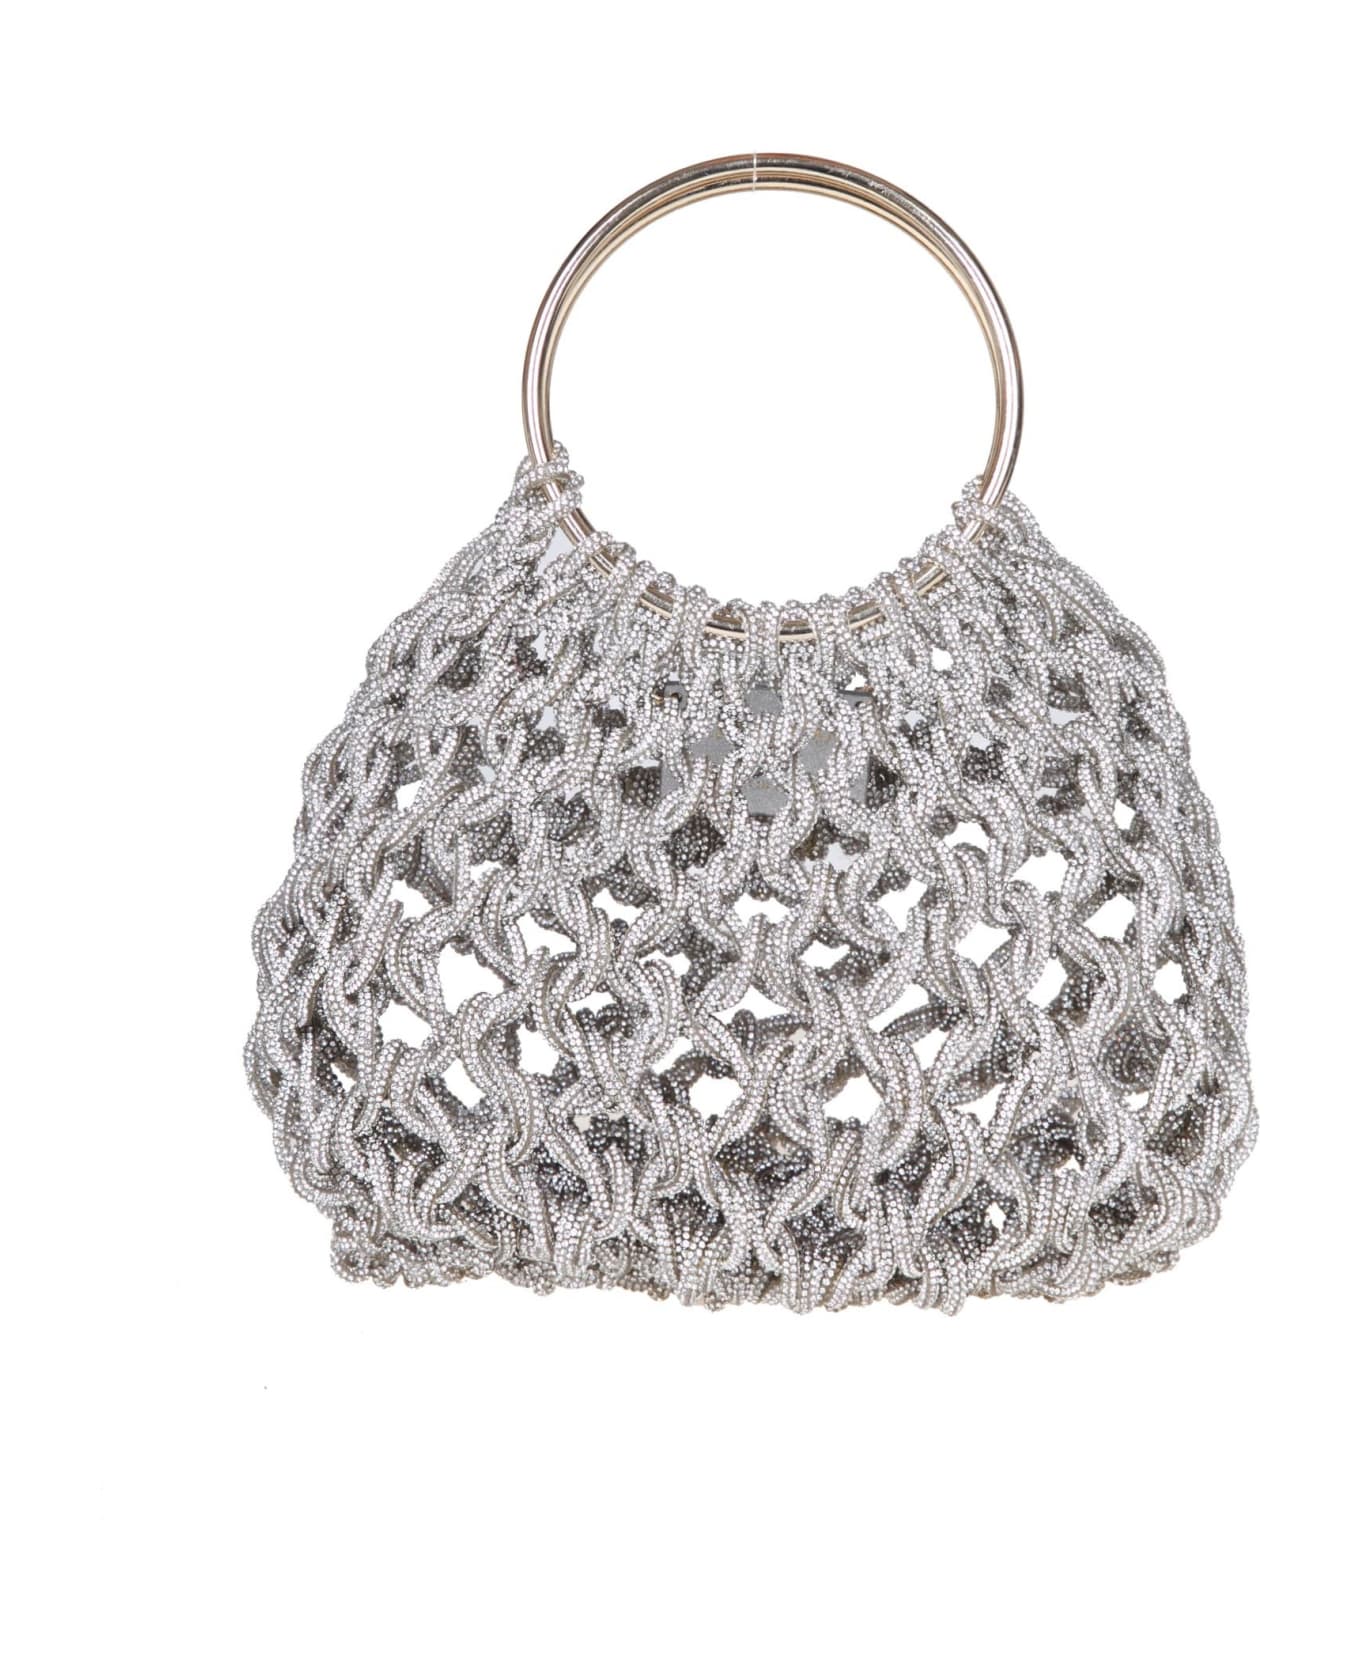 Hibourama Jewel Bag With Applied Crystals - CRYSTALS 